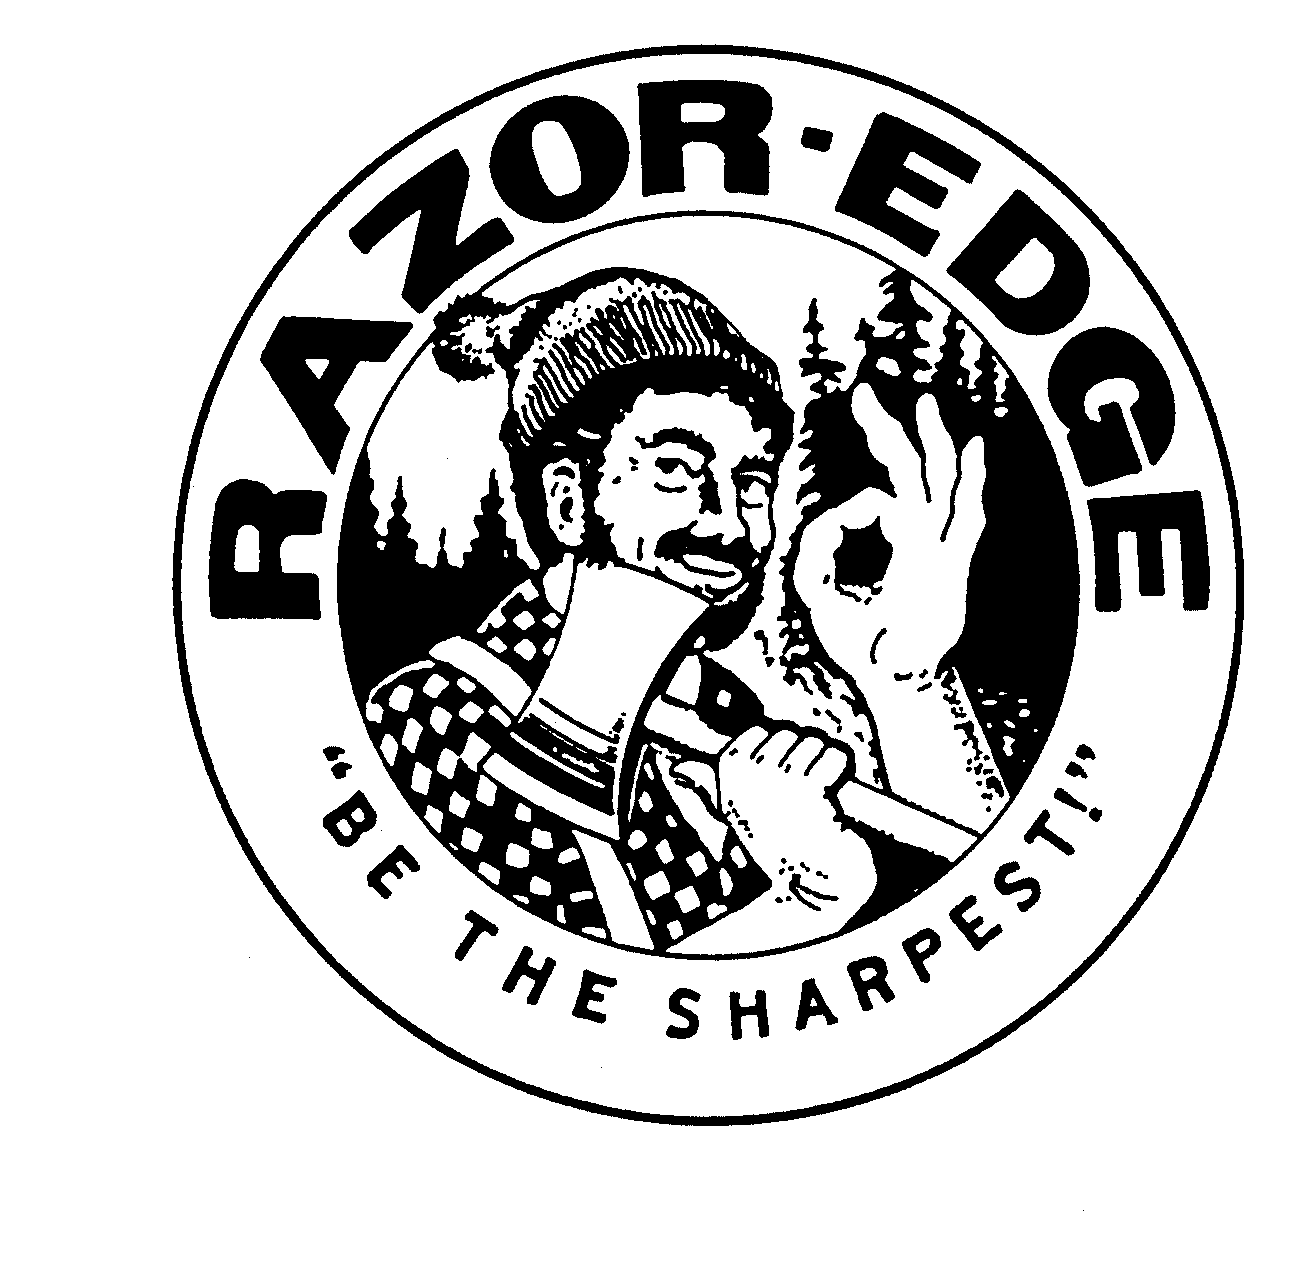  RAZOR-EDGE "BE THE SHARPEST!"